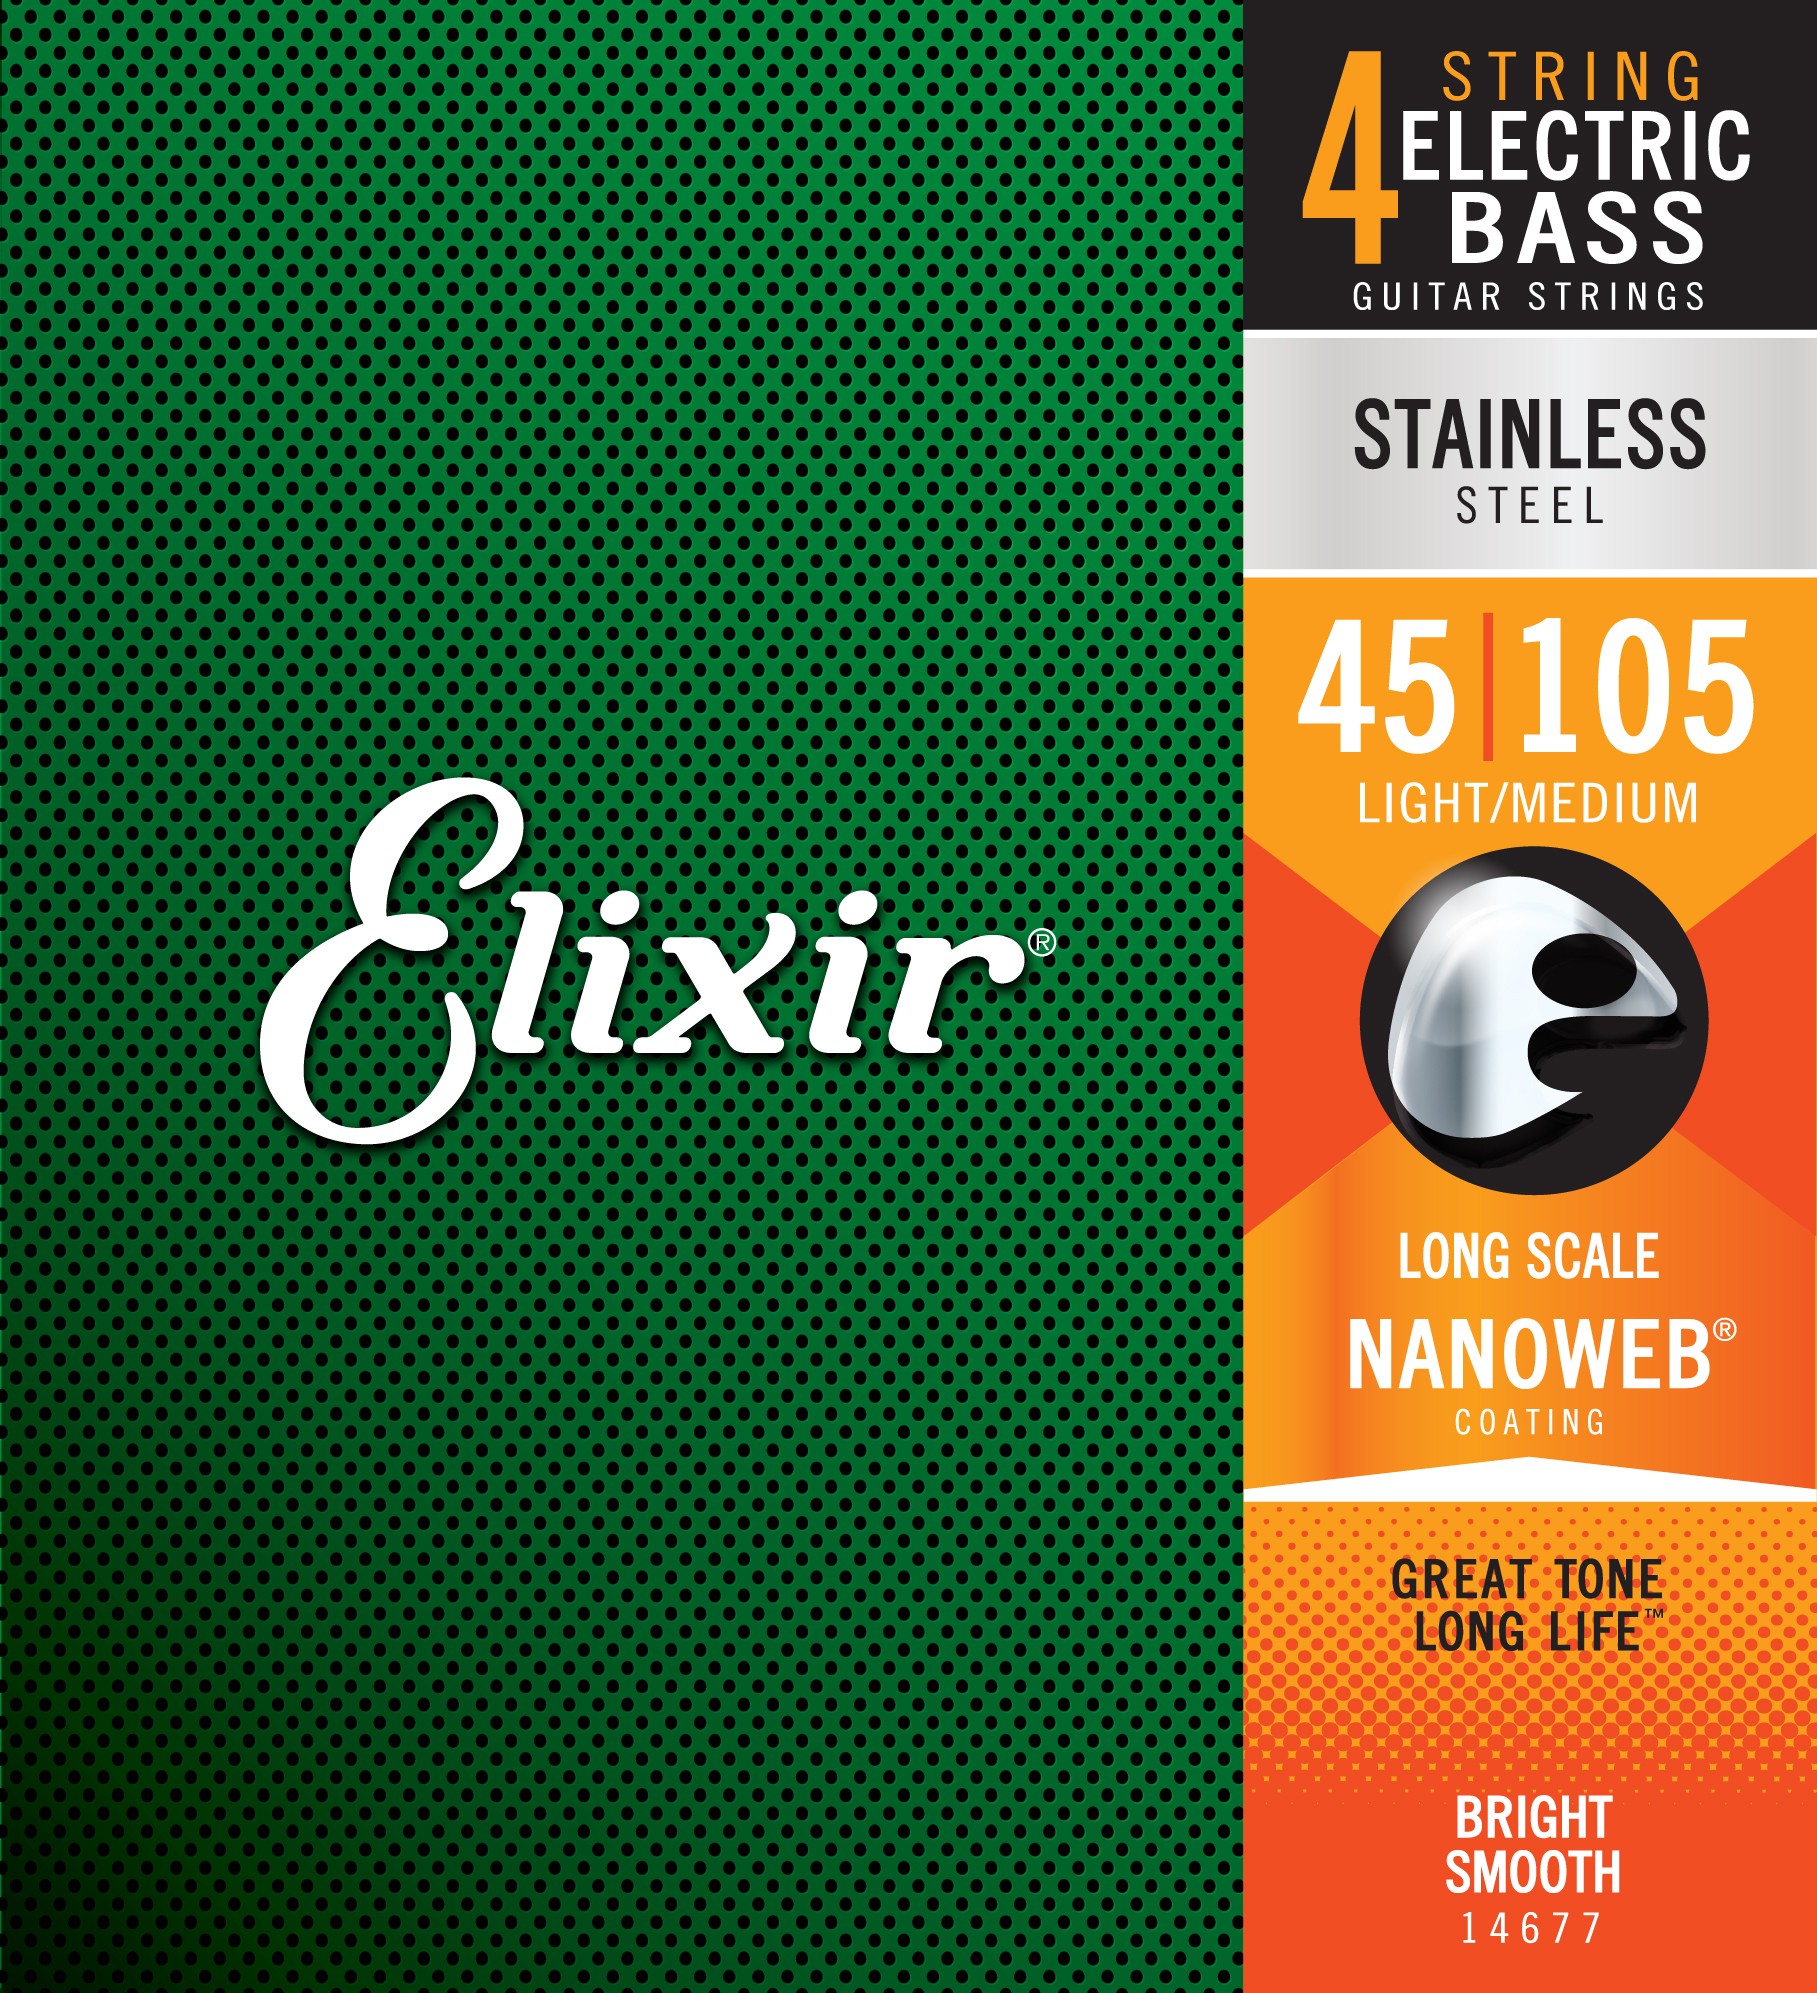 ELIXIR 14677 ELECTRIC BASS STAINLESS STEEL NANOWEB